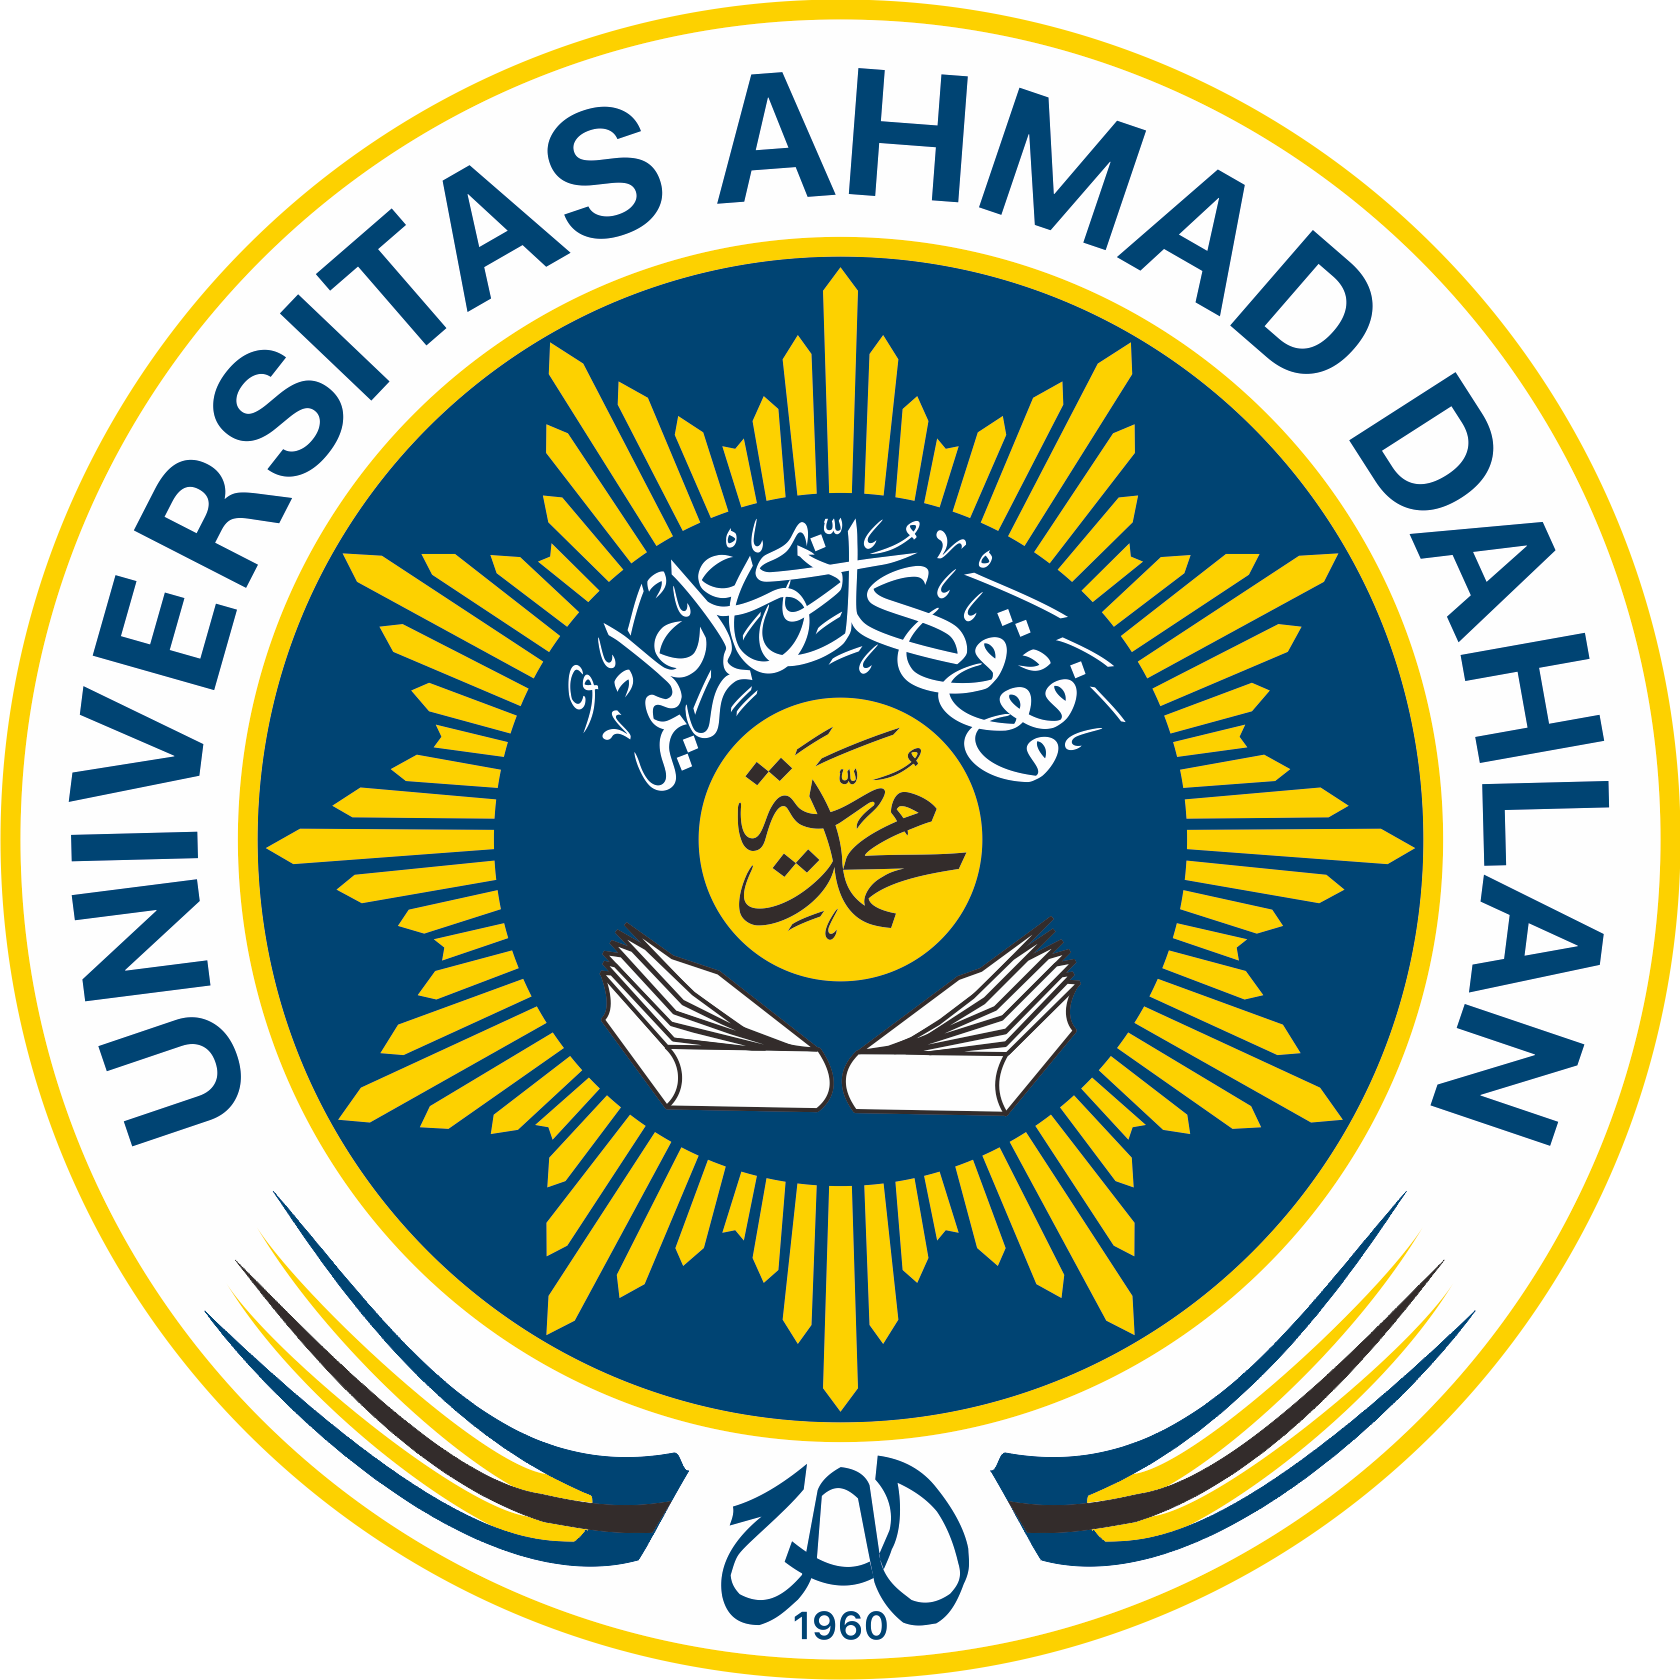 Logo Universitas Ahmad Dahlan Terverifikasi Tahun 2016